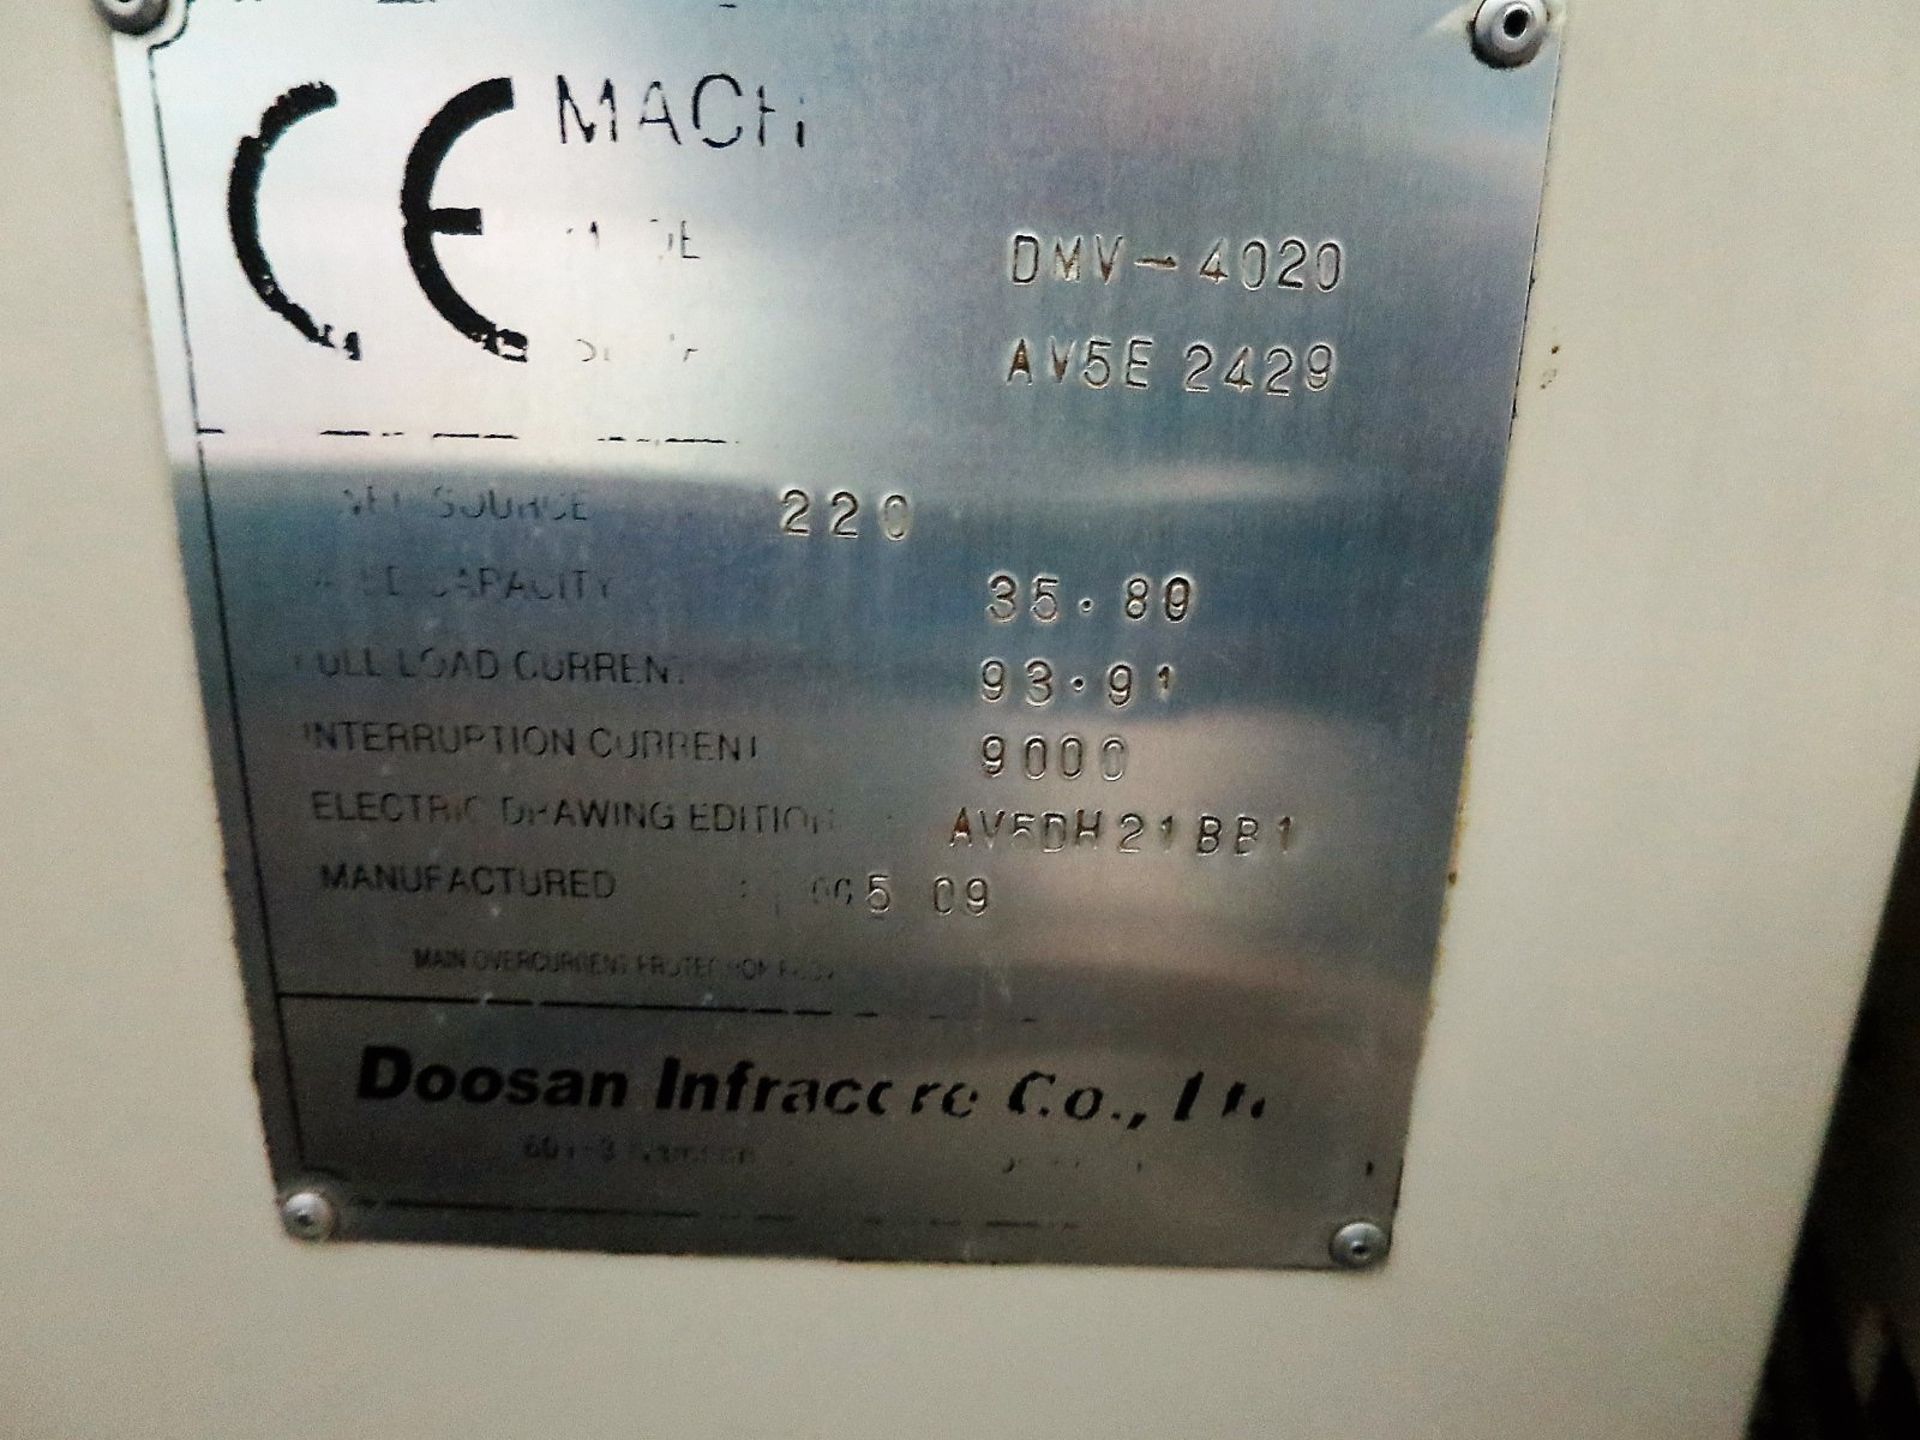 Doosan/Daewoo DMV-4020 Diamond Series CNC Vertical Machining Center, S/N AV5E 2429, New 2005 - Image 10 of 11